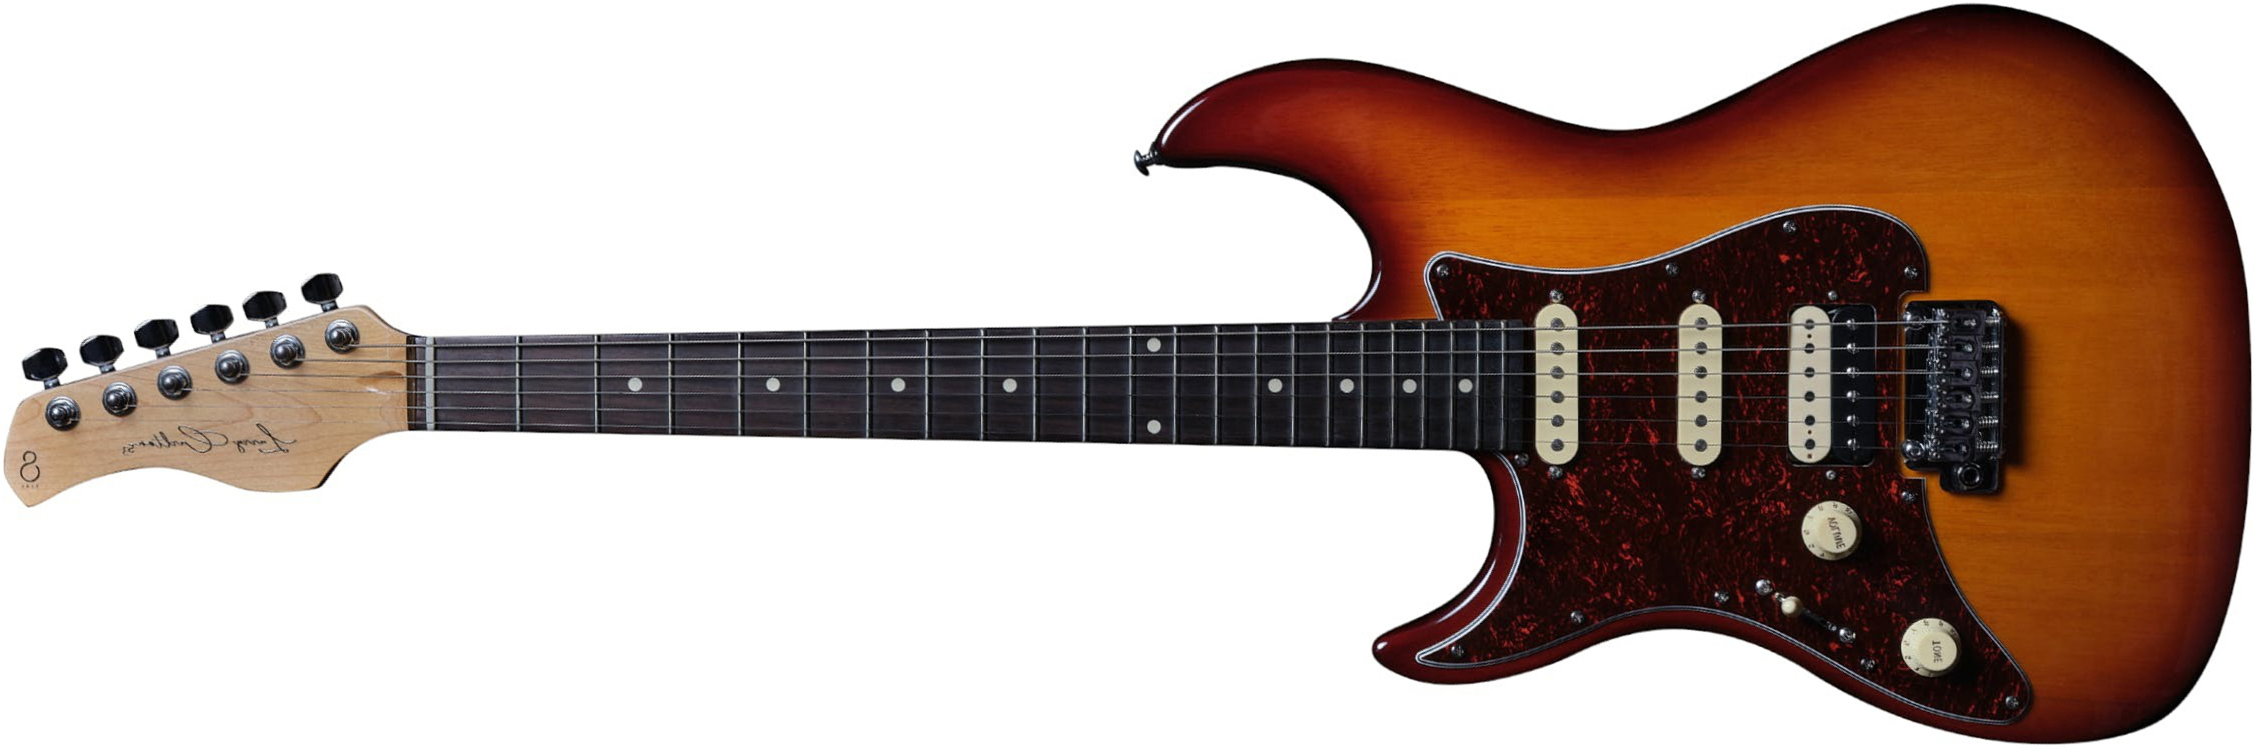 Sire Larry Carlton S3 Lh Signature Gaucher Hss Trem Rw - Tobacco Sunburst - Left-handed electric guitar - Main picture